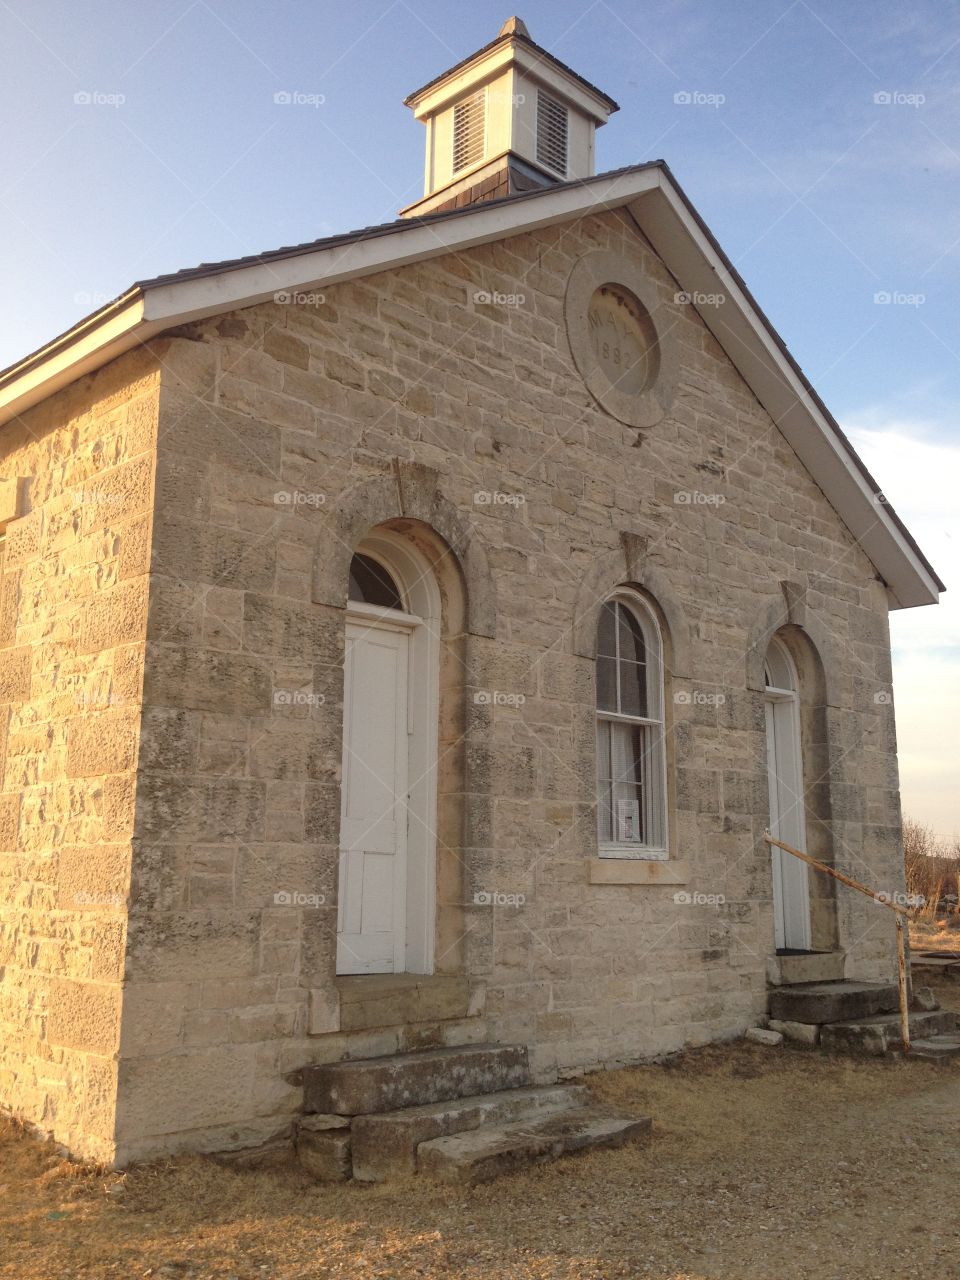 Historical School House on the Plains